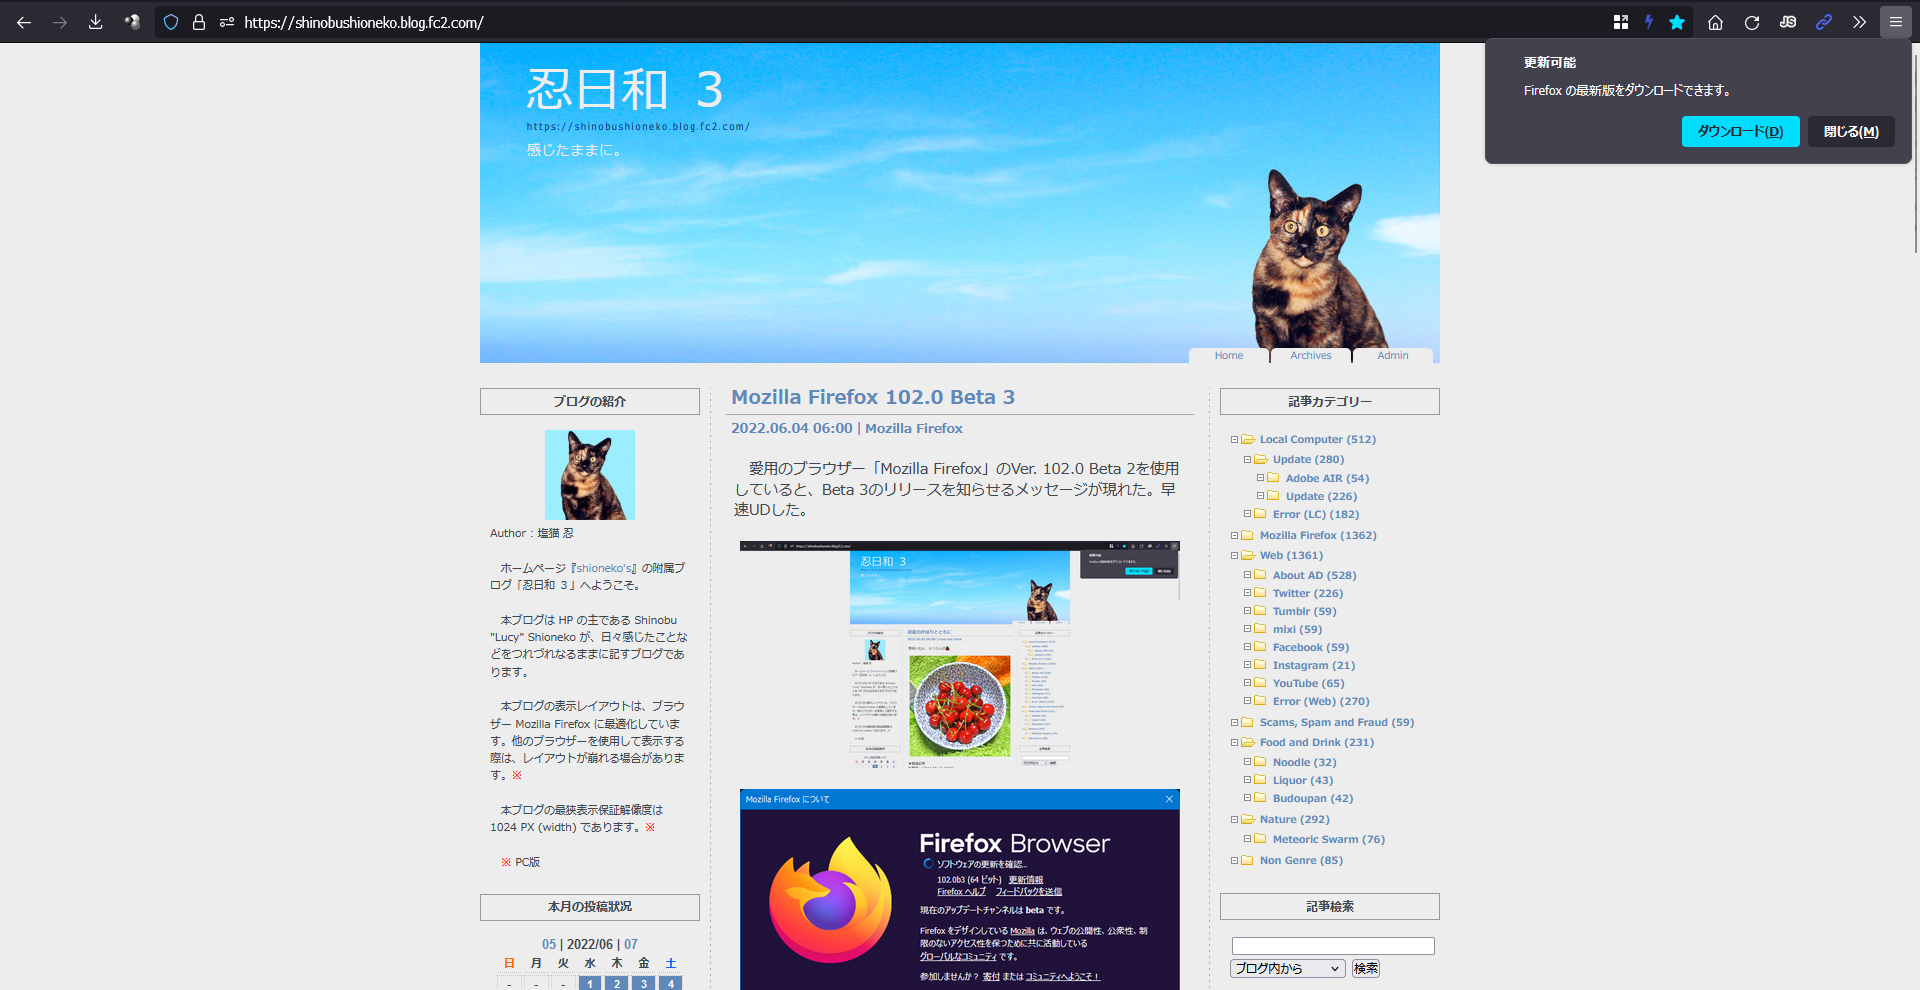 Mozilla Firefox 102.0 Beta 4